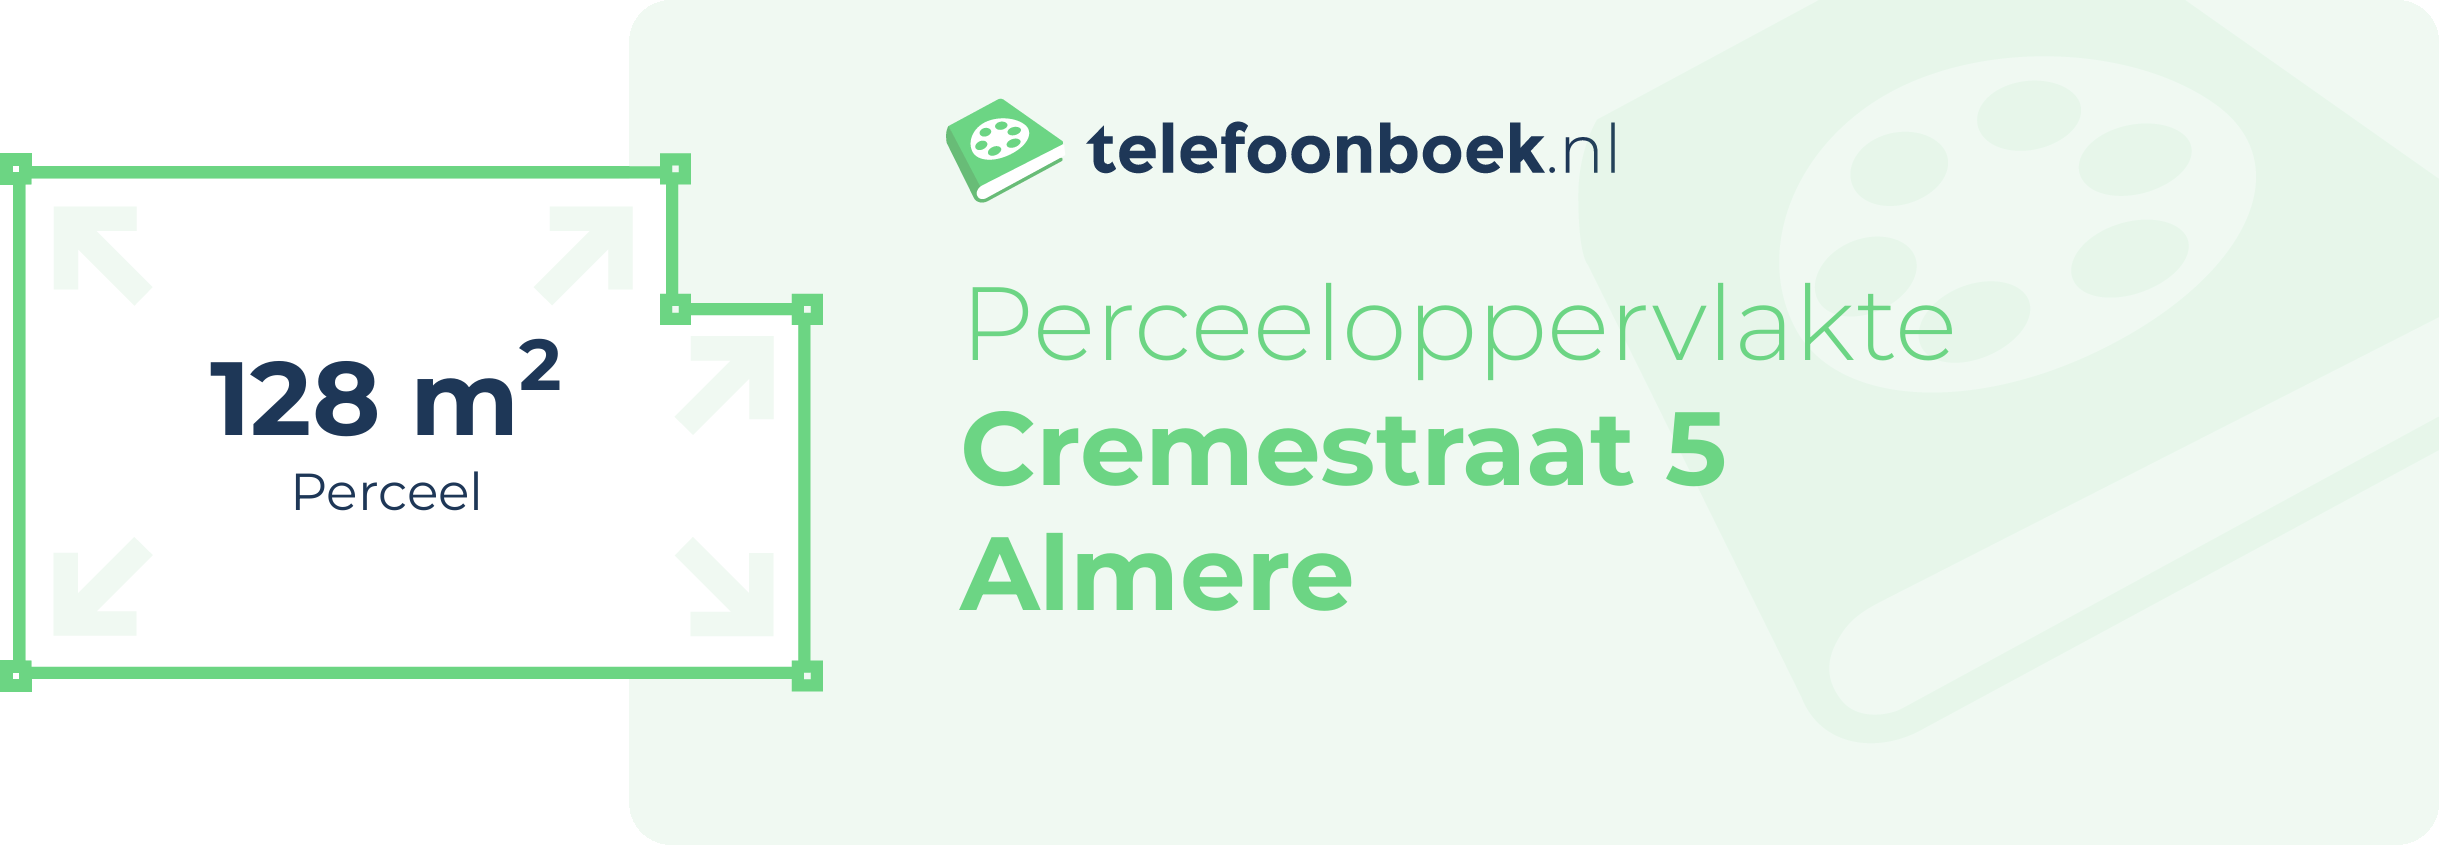 Perceeloppervlakte Cremestraat 5 Almere